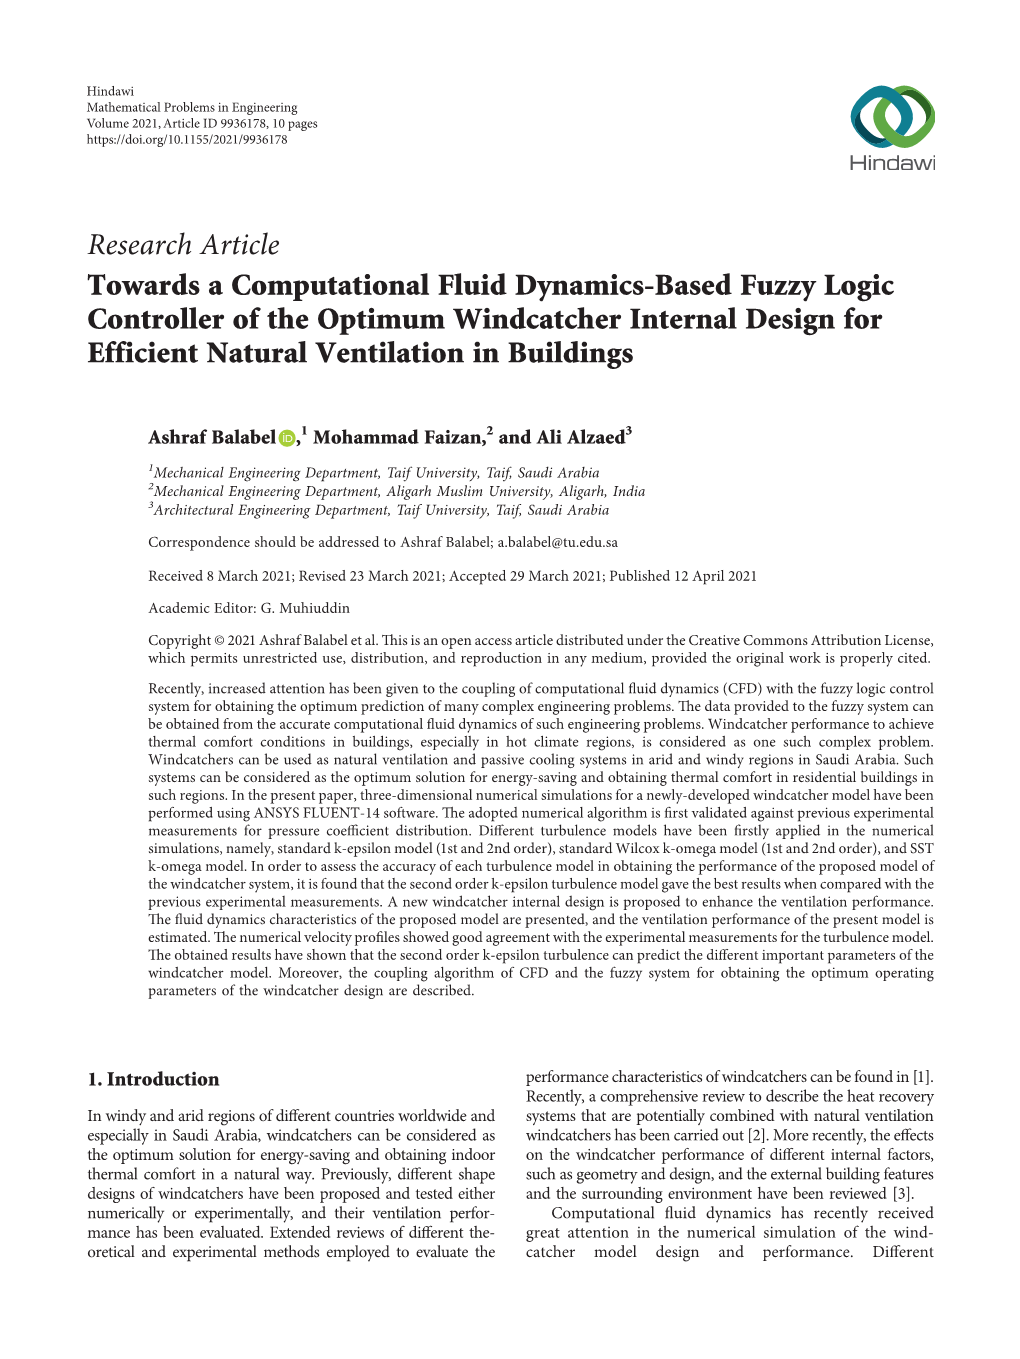 Towards a Computational Fluid Dynamics-Based Fuzzy Logic Controller of the Optimum Windcatcher Internal Design for Efficient Natural Ventilation in Buildings